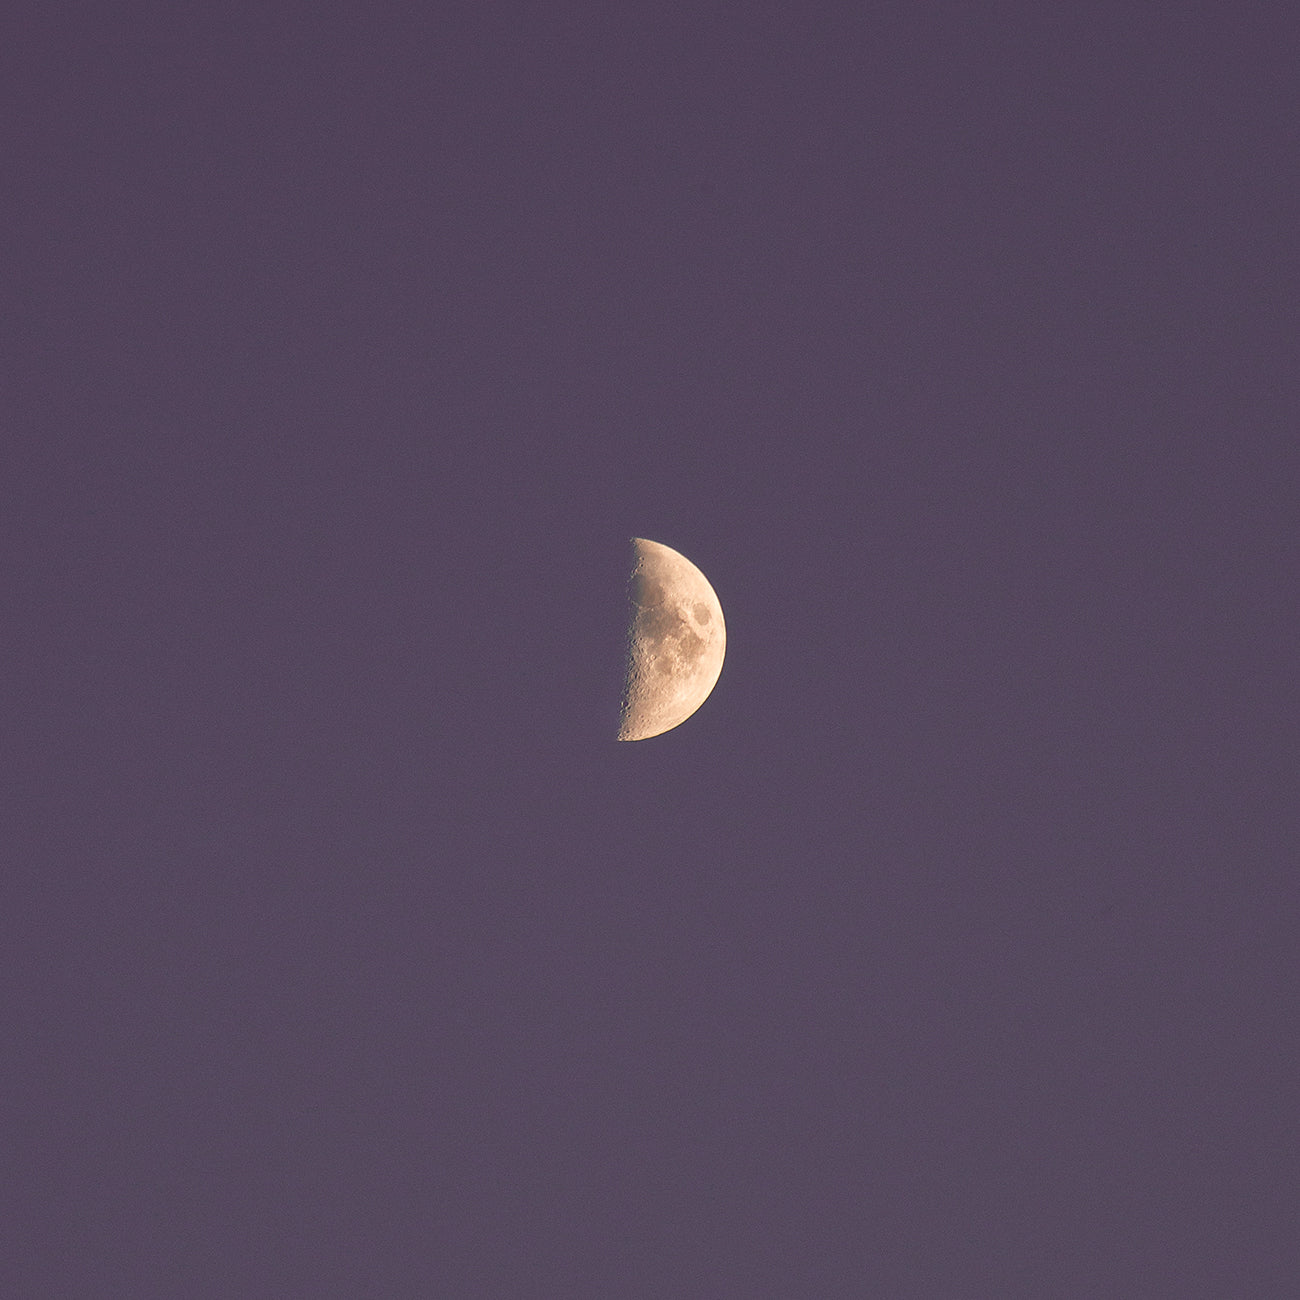 https://burst.shopifycdn.com/photos/half-moon-at-night.jpg?exif=0&iptc=0